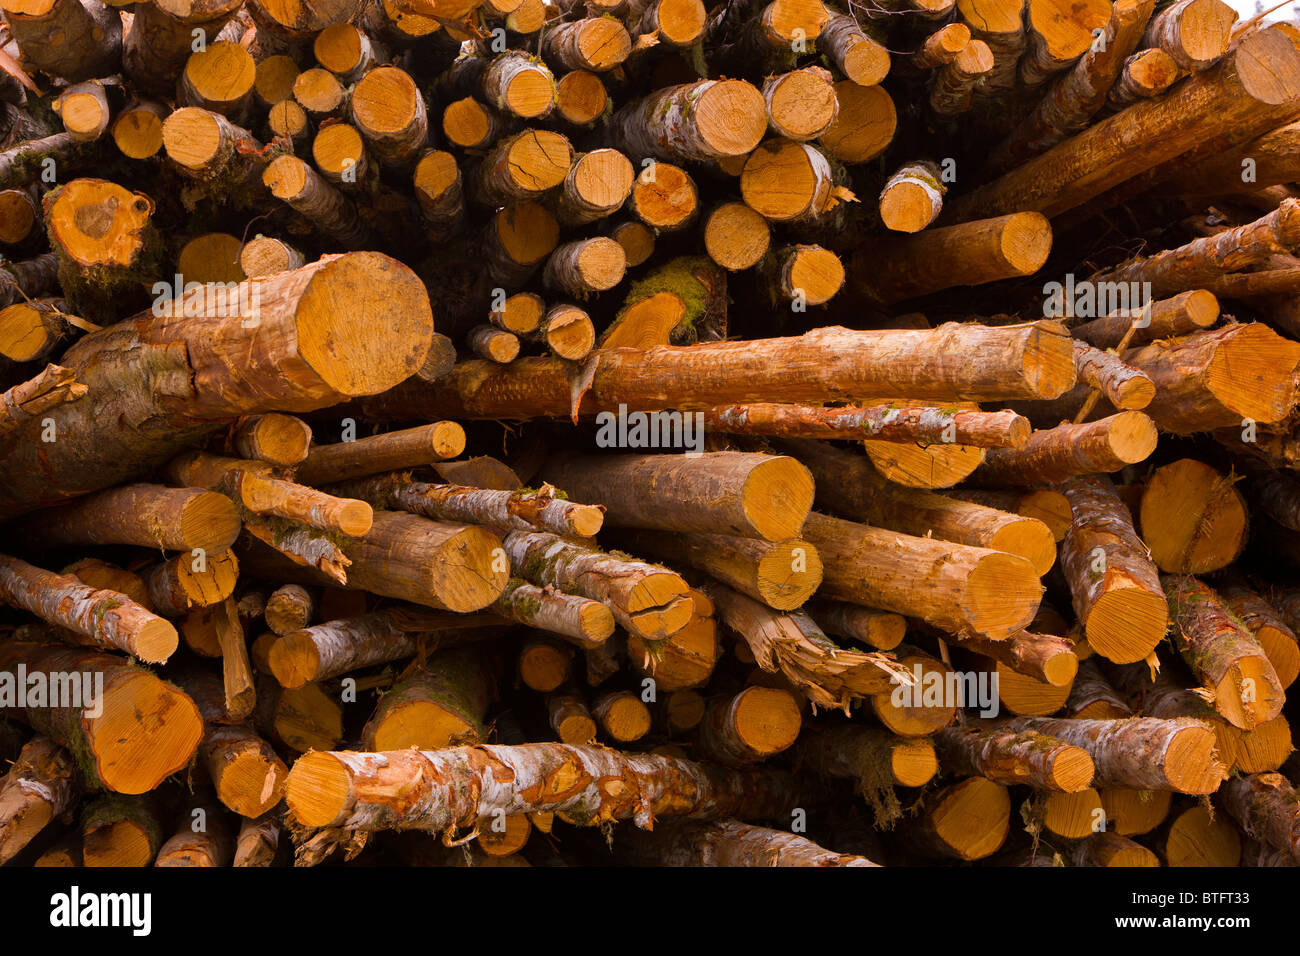 COOS BAY, OREGON, USA - Logs stacked at Weyerhaeuser lumber mill. Stock Photo